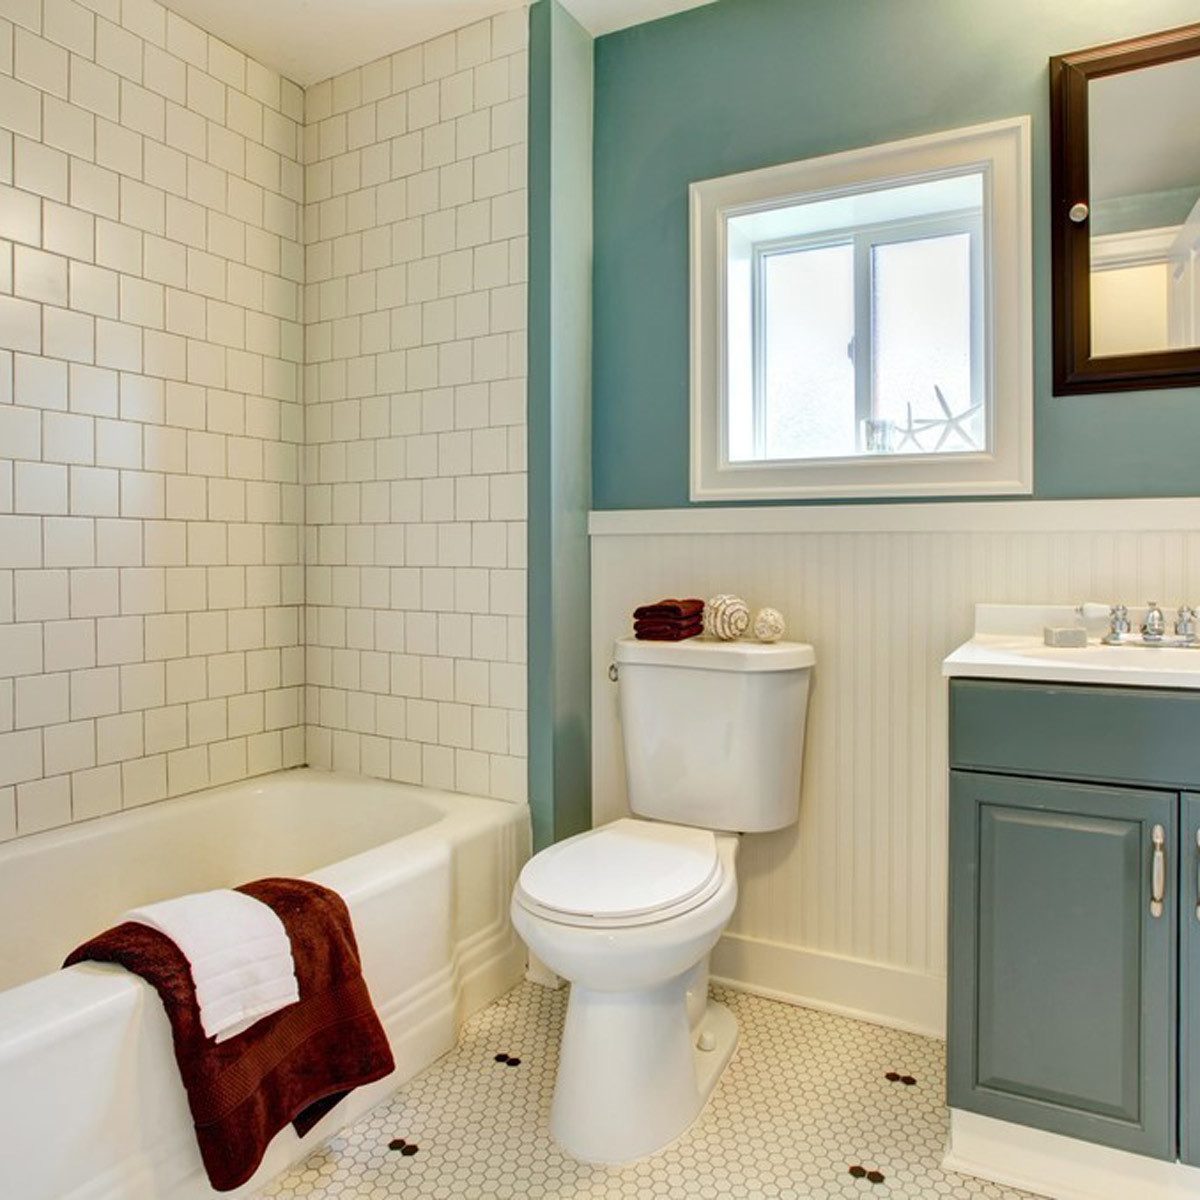 Creative Bathroom Tile Design Ideas - Tiles for Floor, Showers and Walls in  Bathrooms